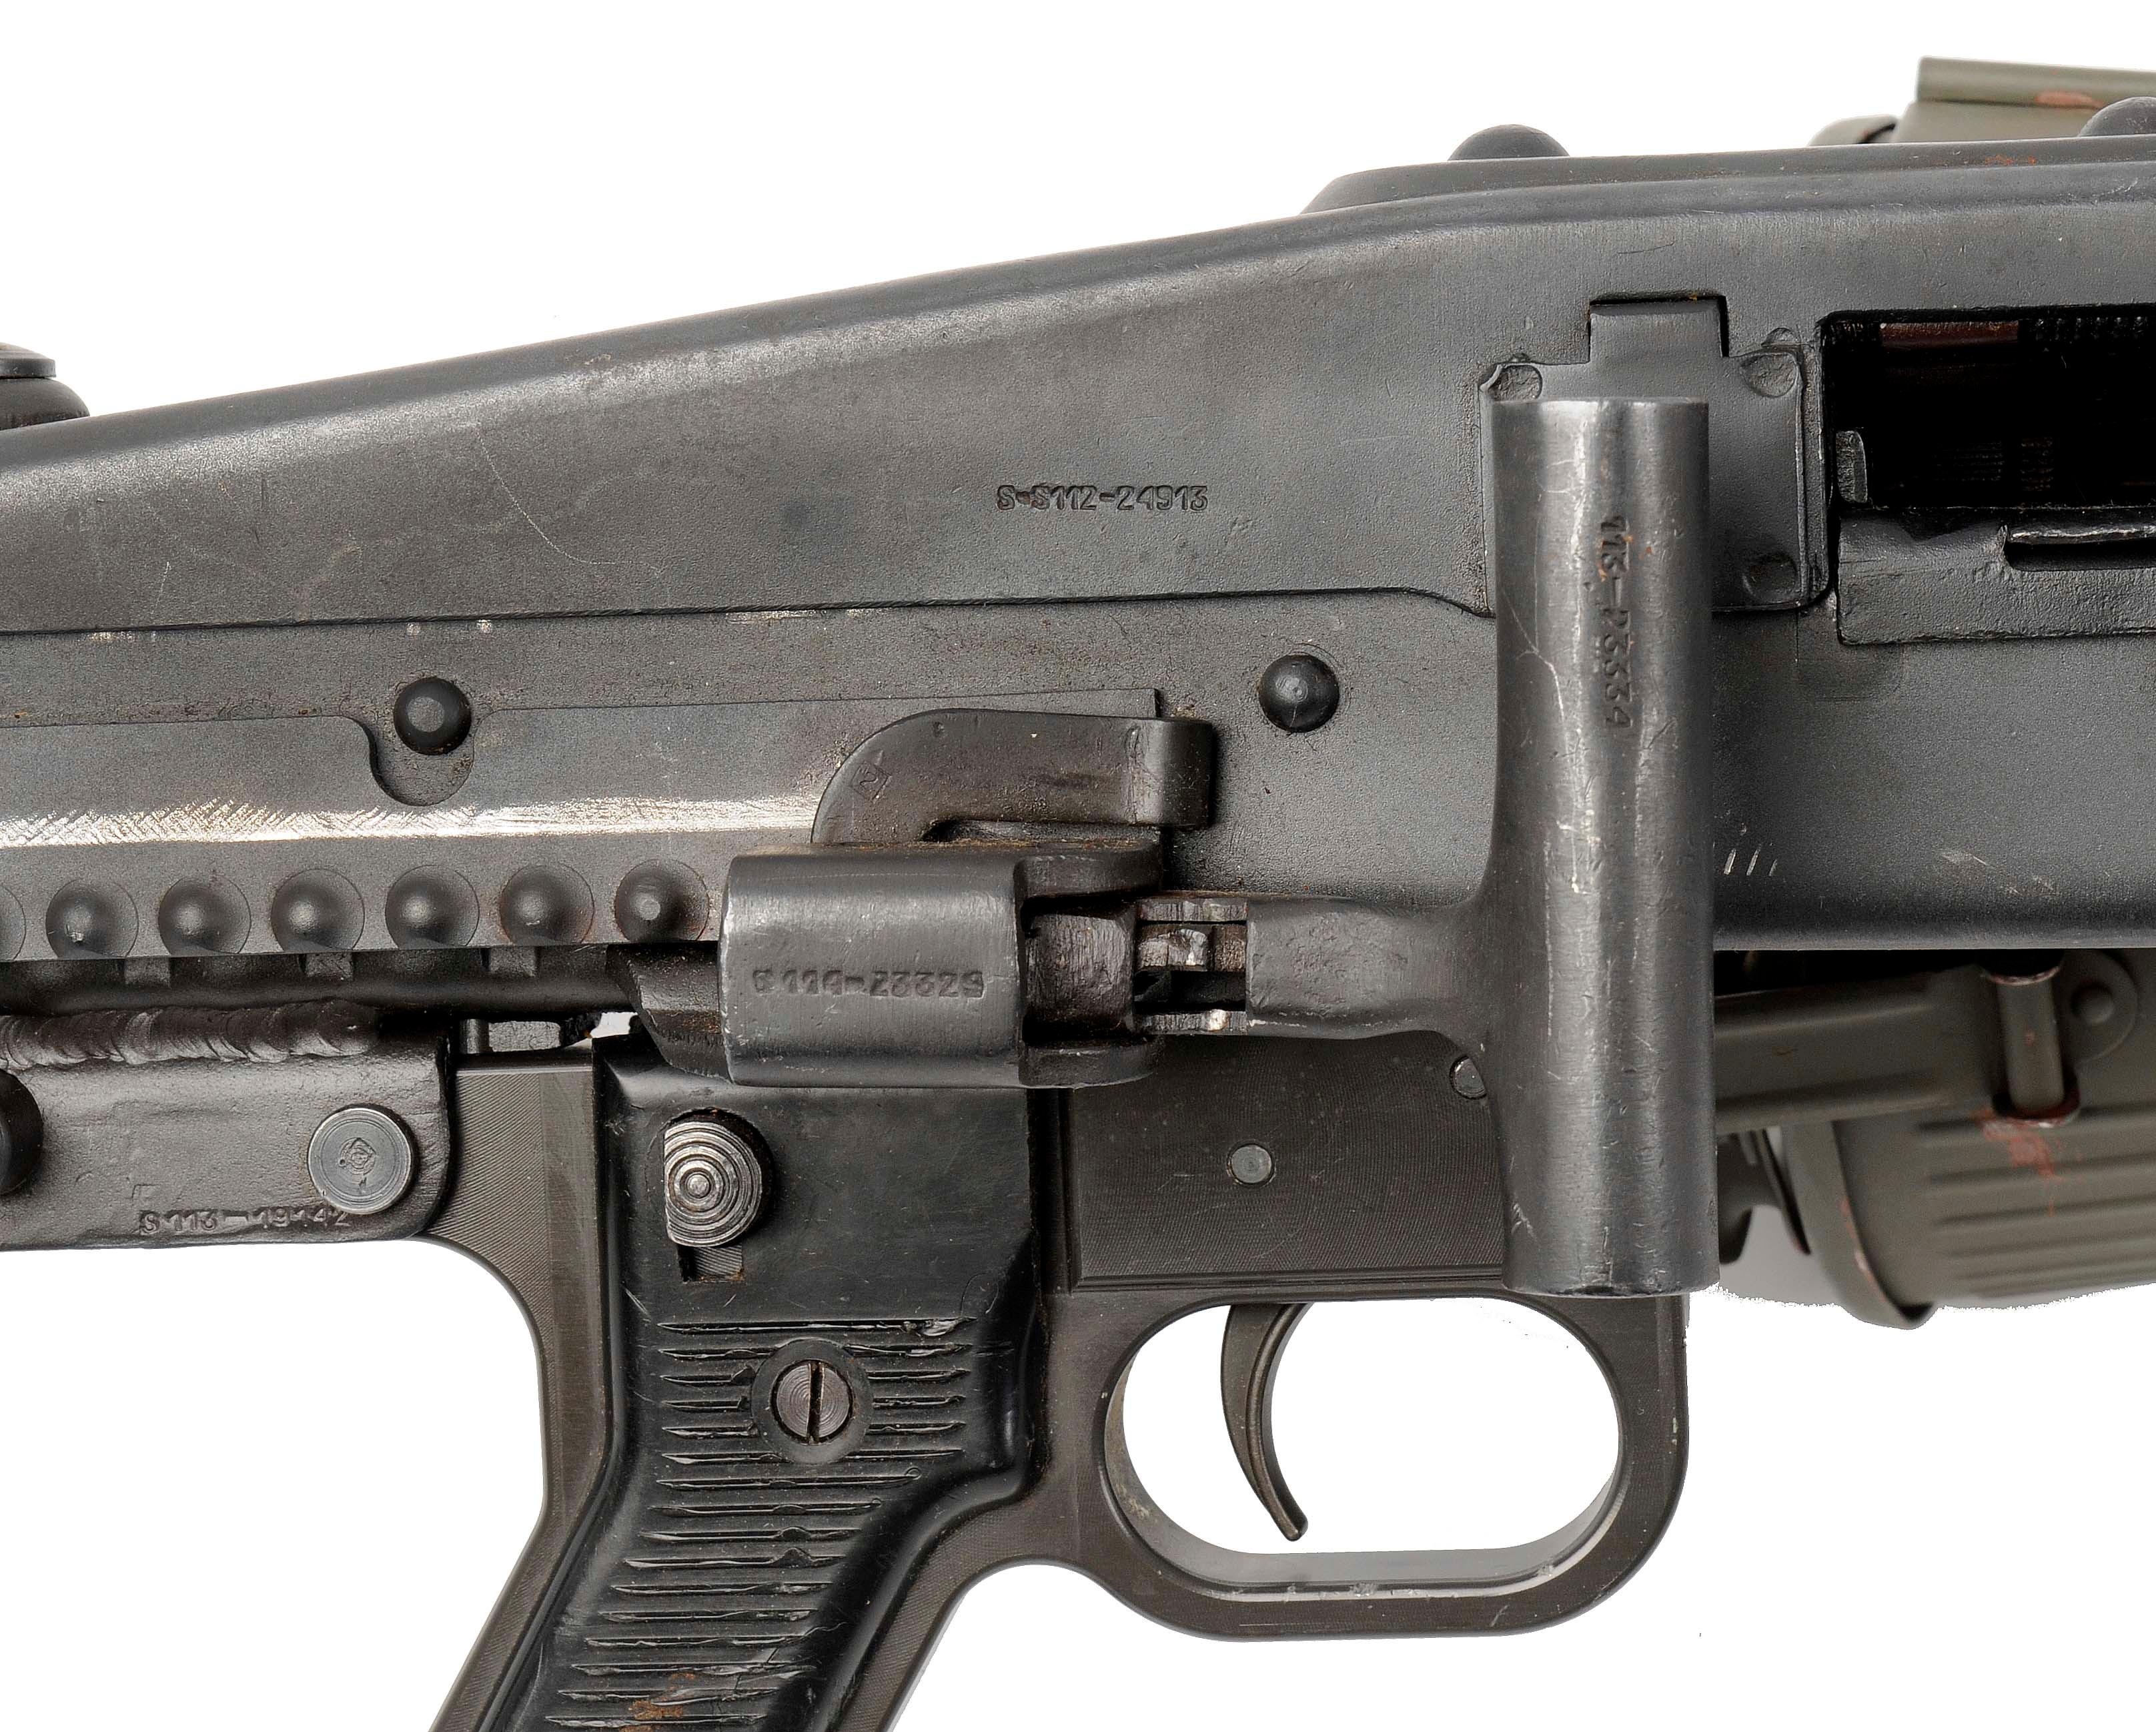 Yugoslavian M53 / MG42 8mm Mauser Belt Fed Semi-Automatic Rifle By Wiselite FFL # WLA28-7097 (DLZ1)